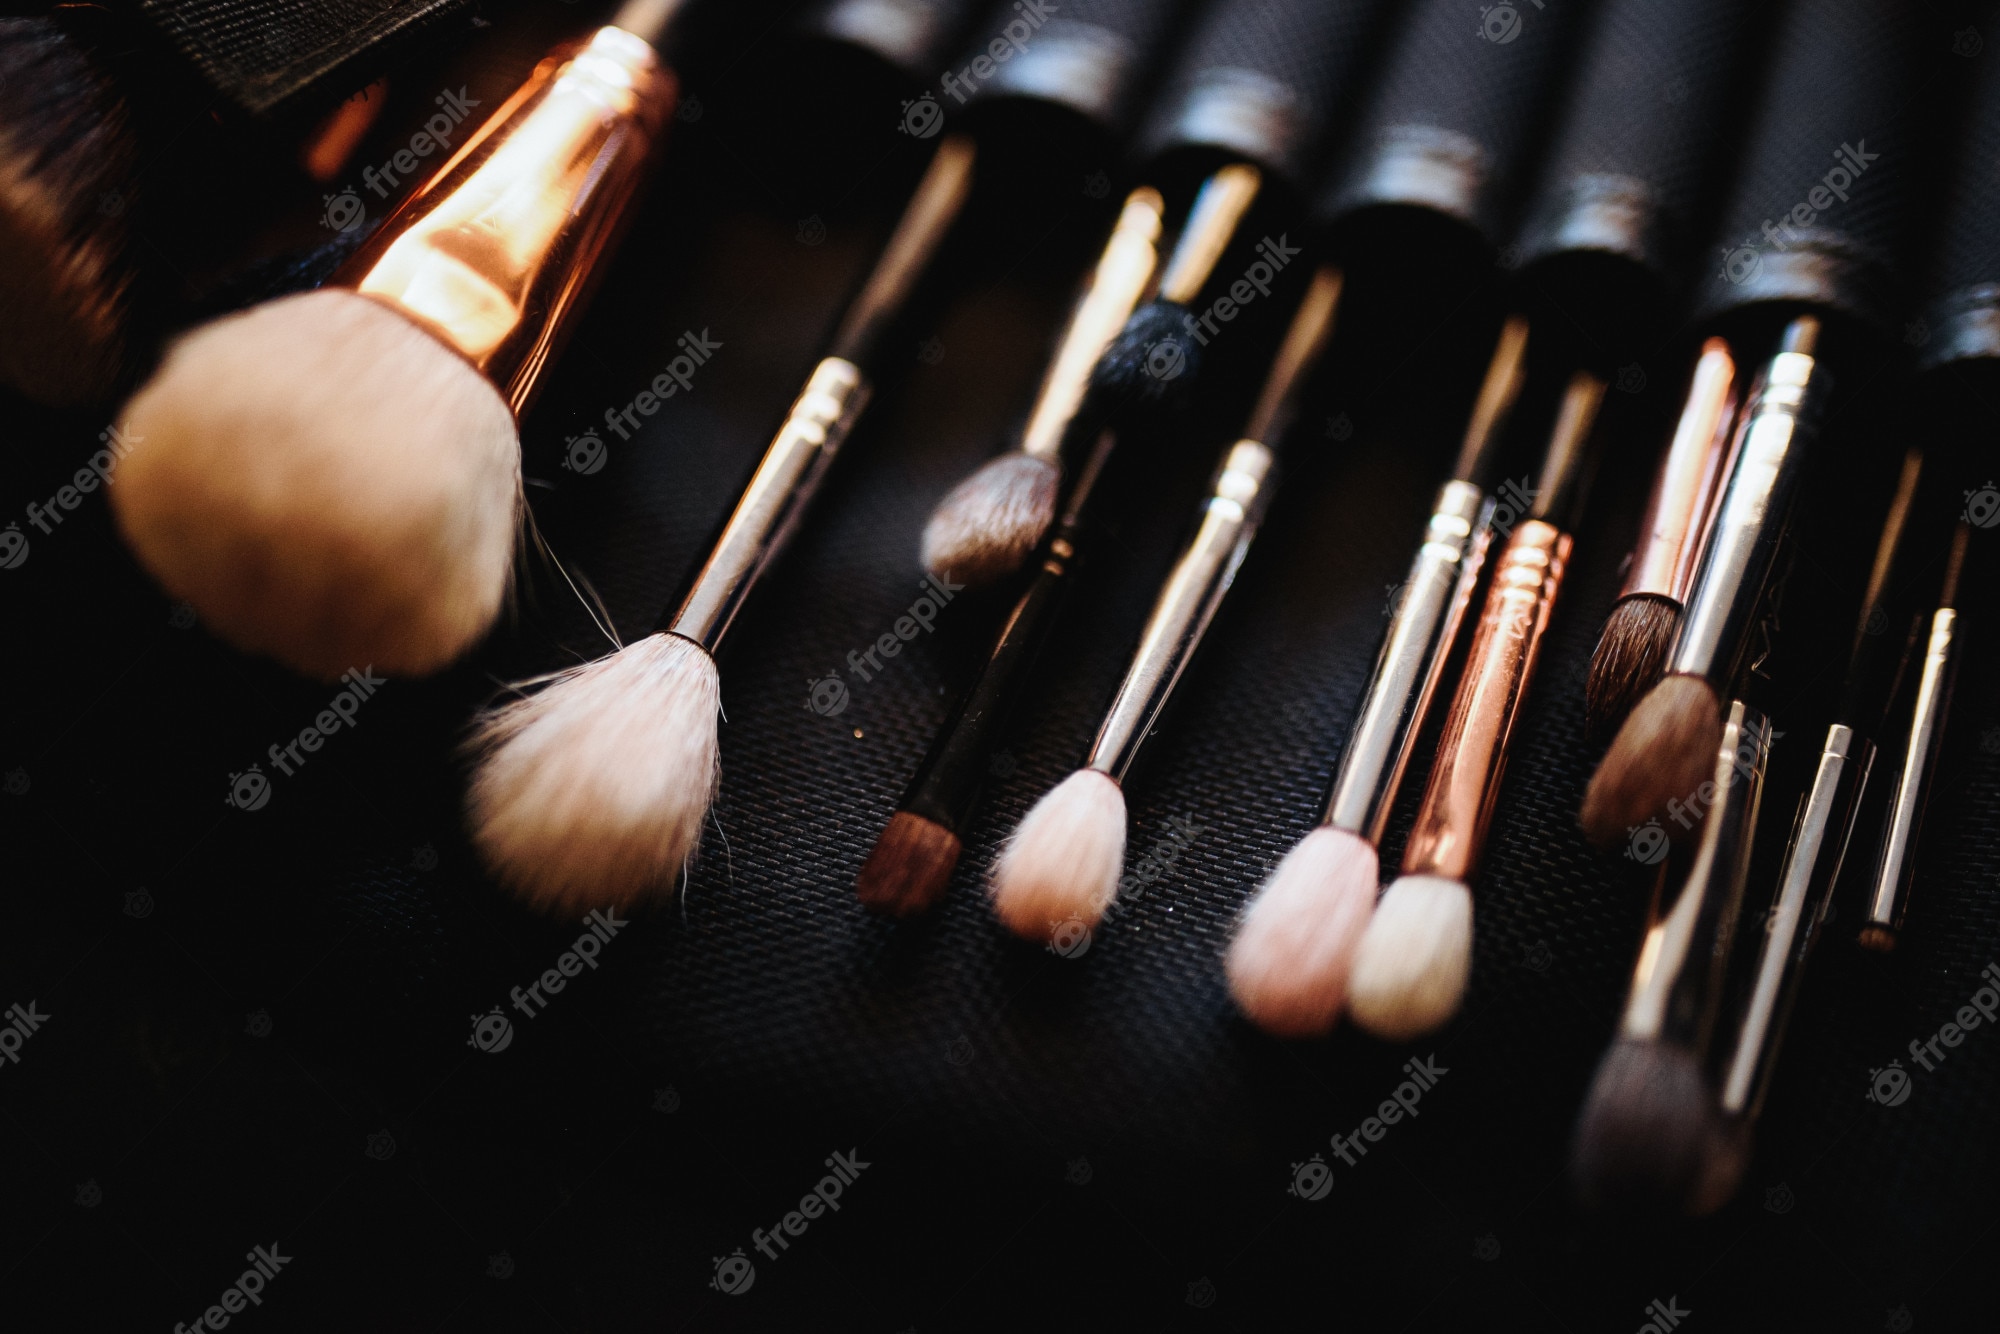 Makeup Brushes Image